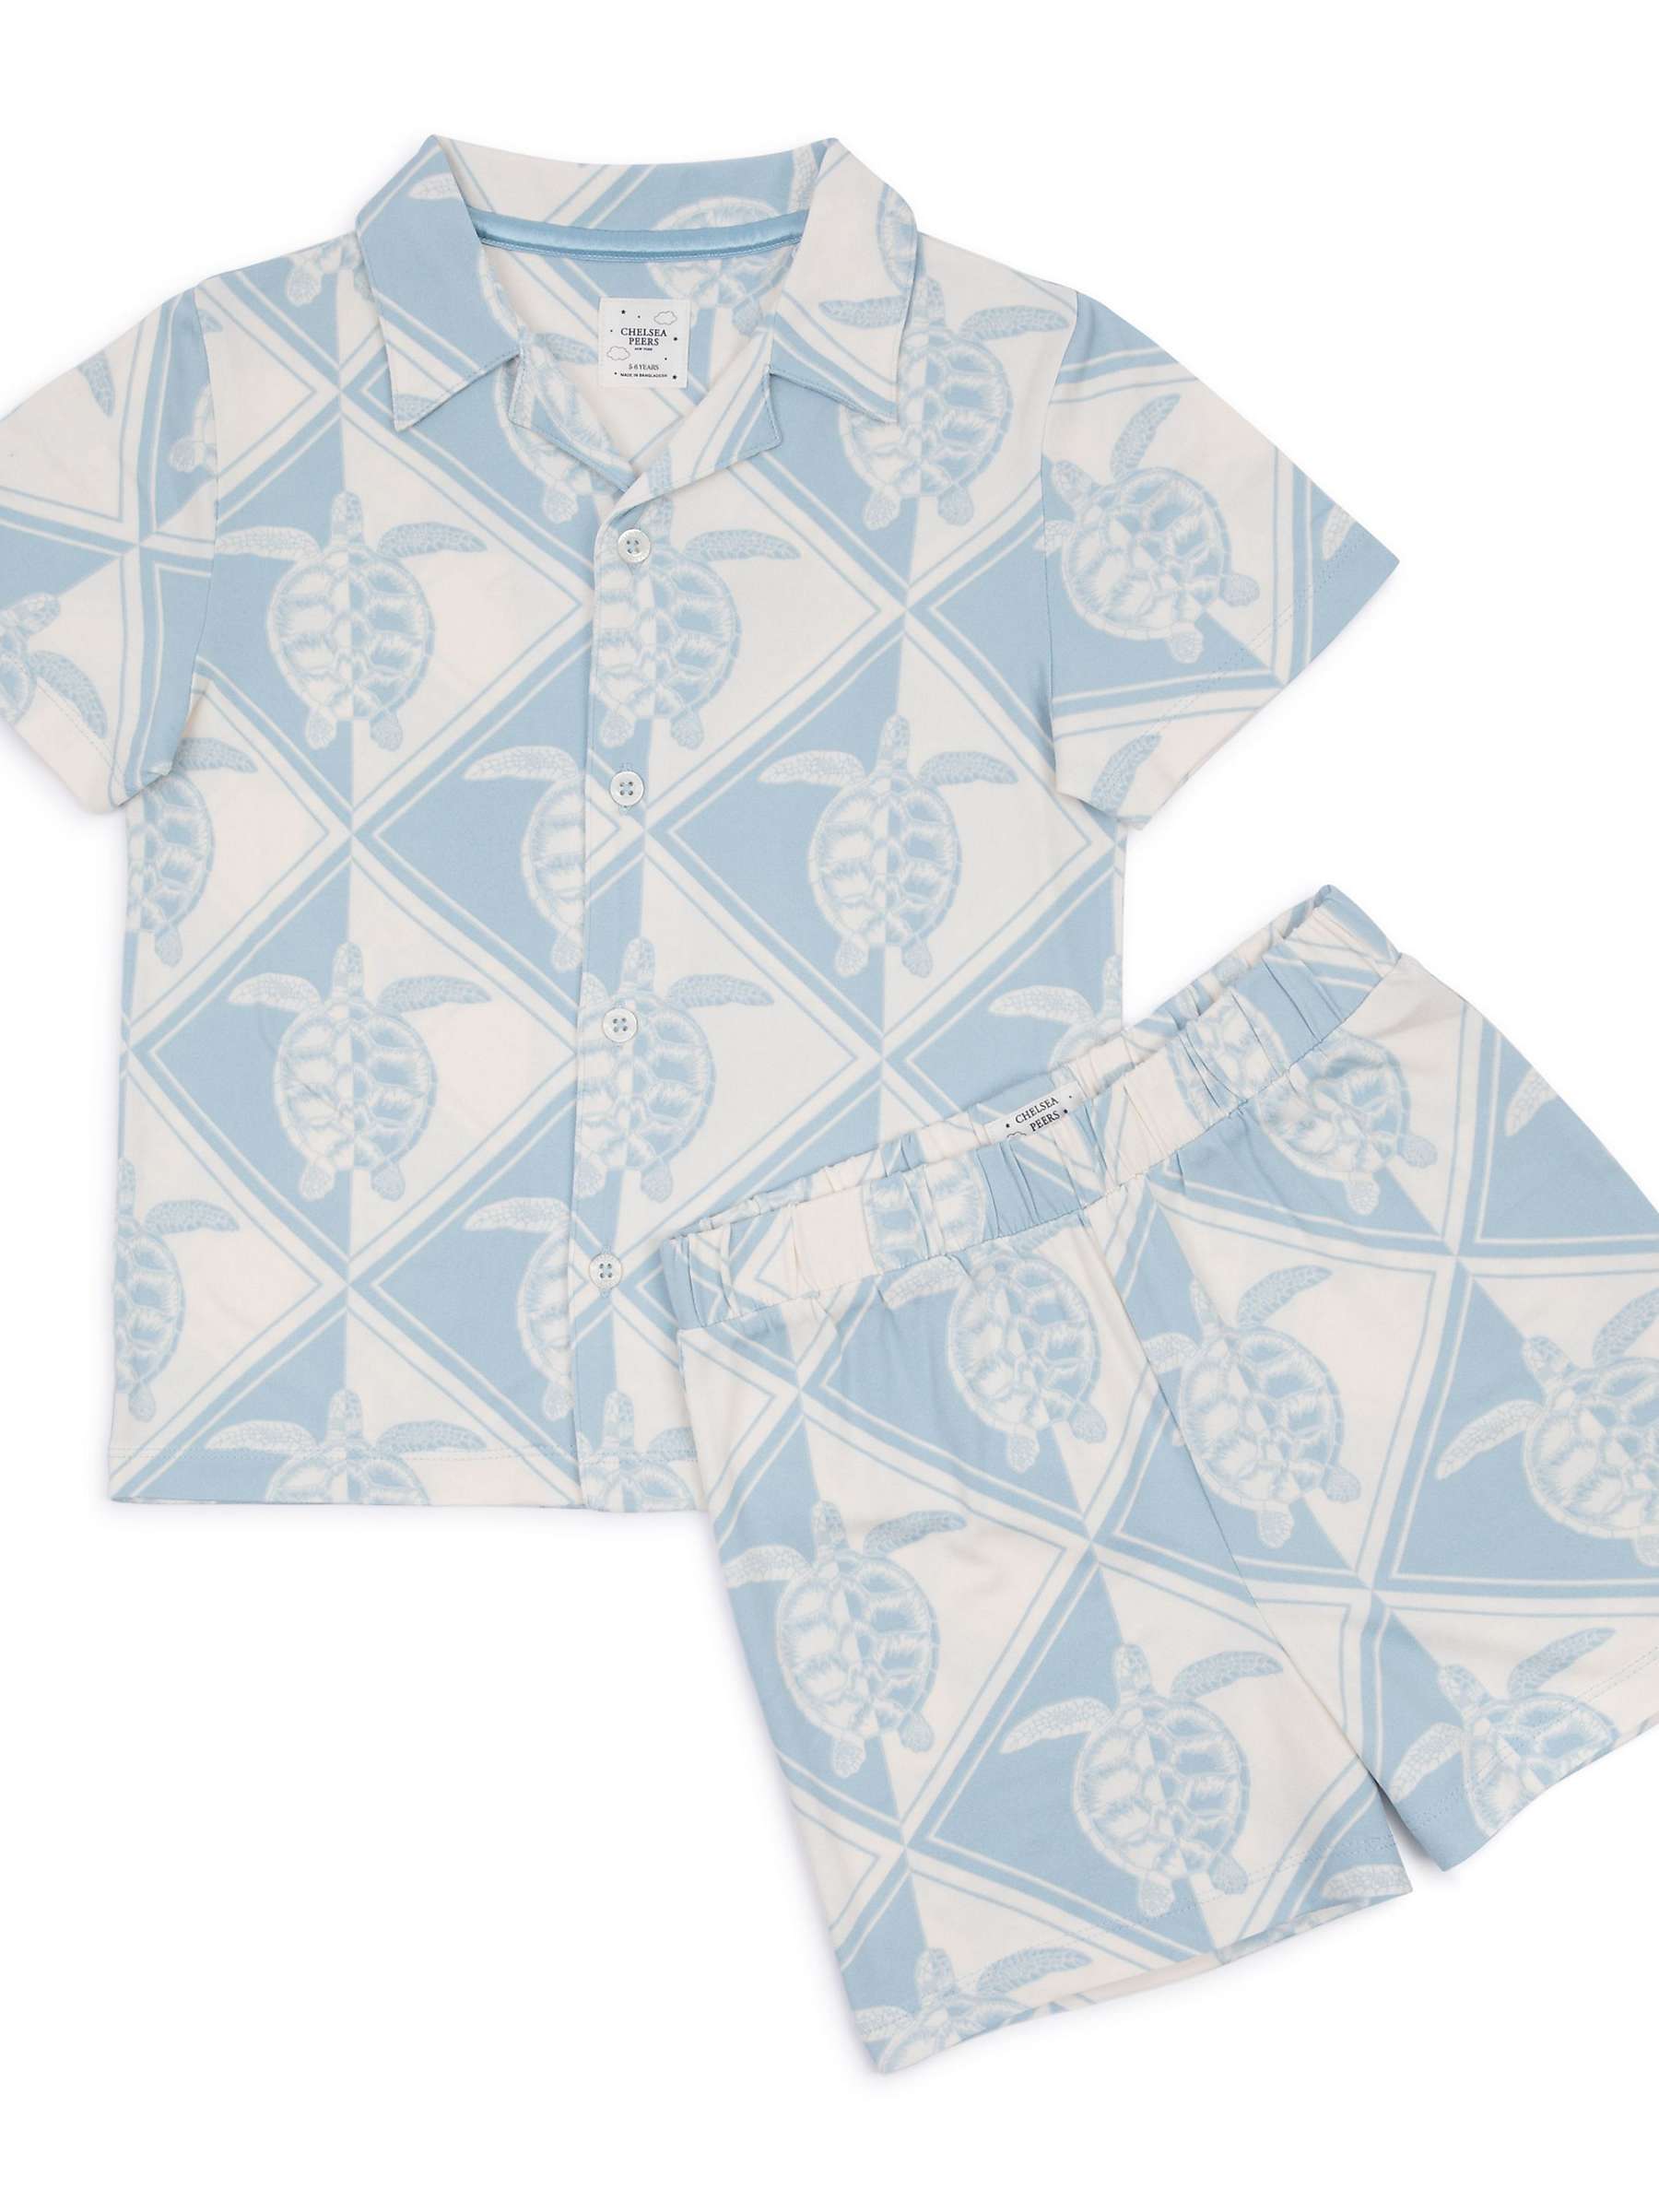 Buy Chelsea Peers Kids' Tiled Turtle Short Pyjama Set, Off White/Blue Online at johnlewis.com